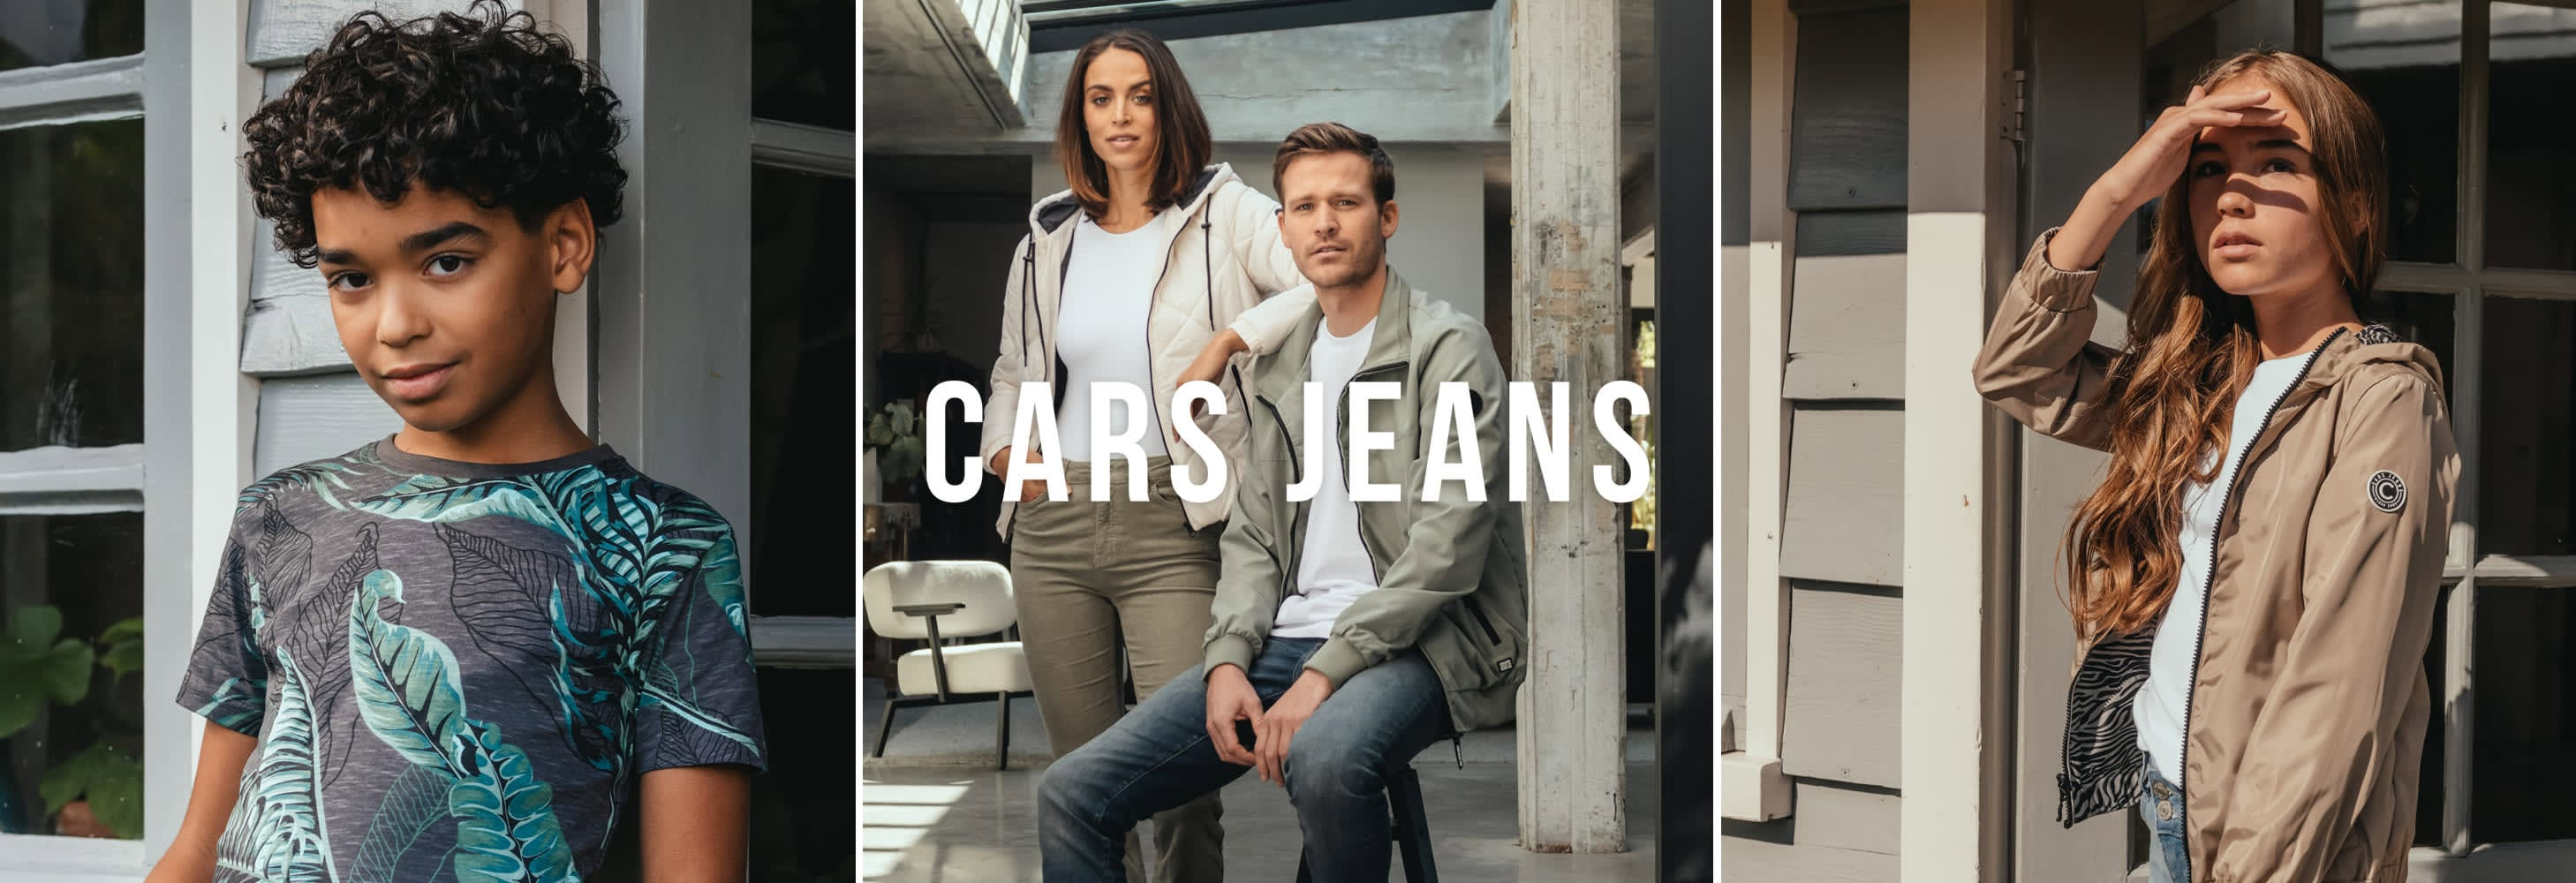 Cars jeans en kleding kopen | There for fashion | Jeans Centre